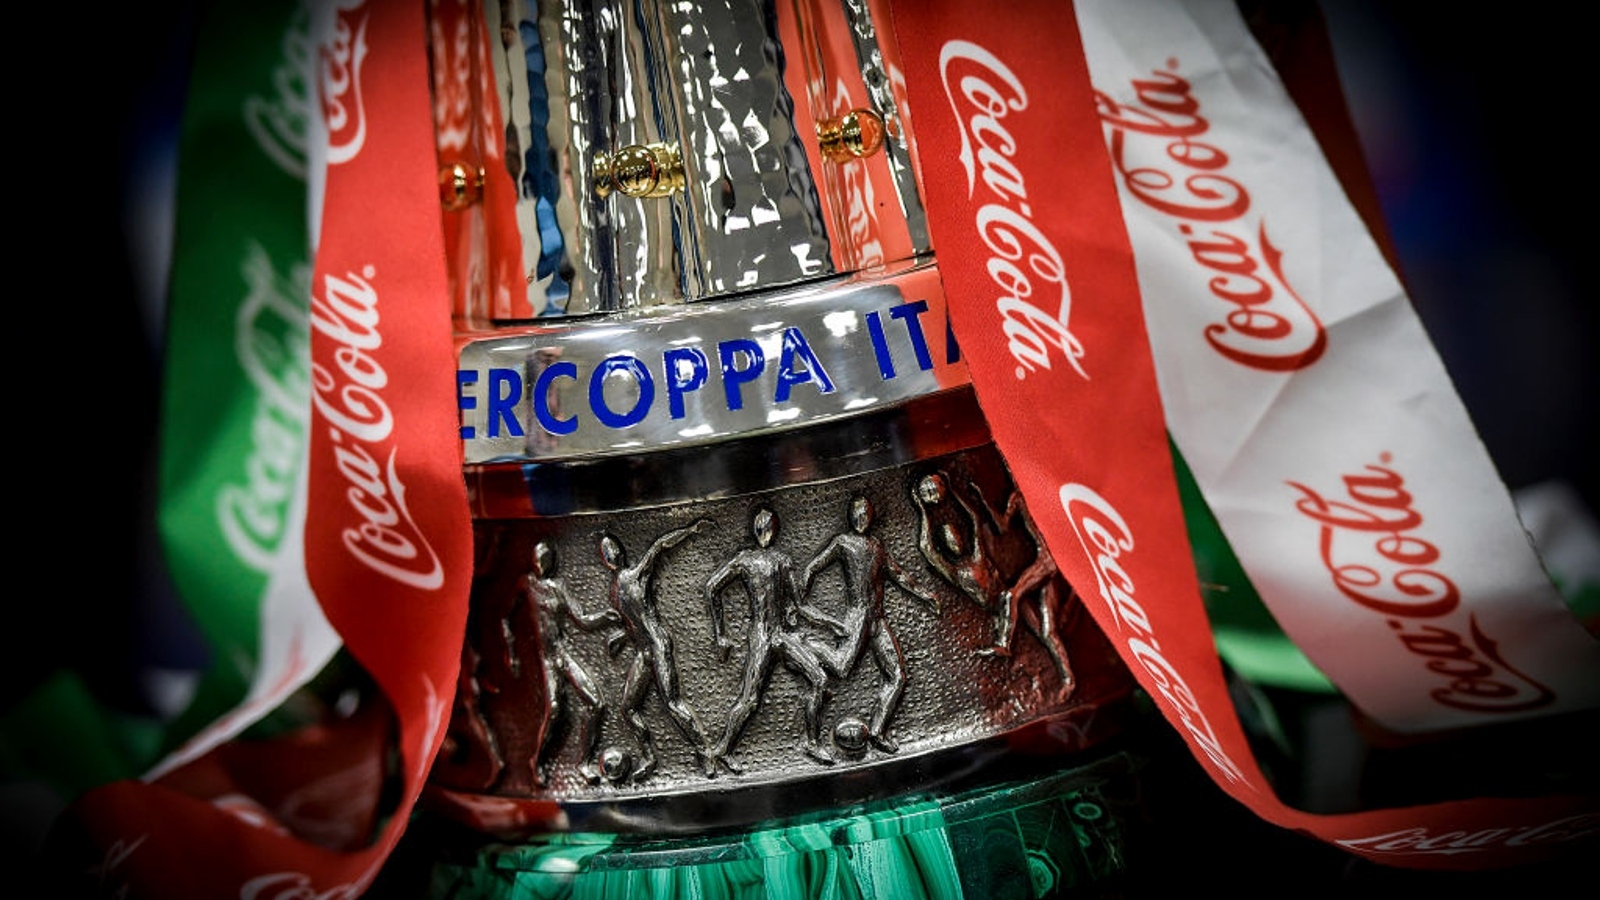 Coppa Italia title got a new sponsor  